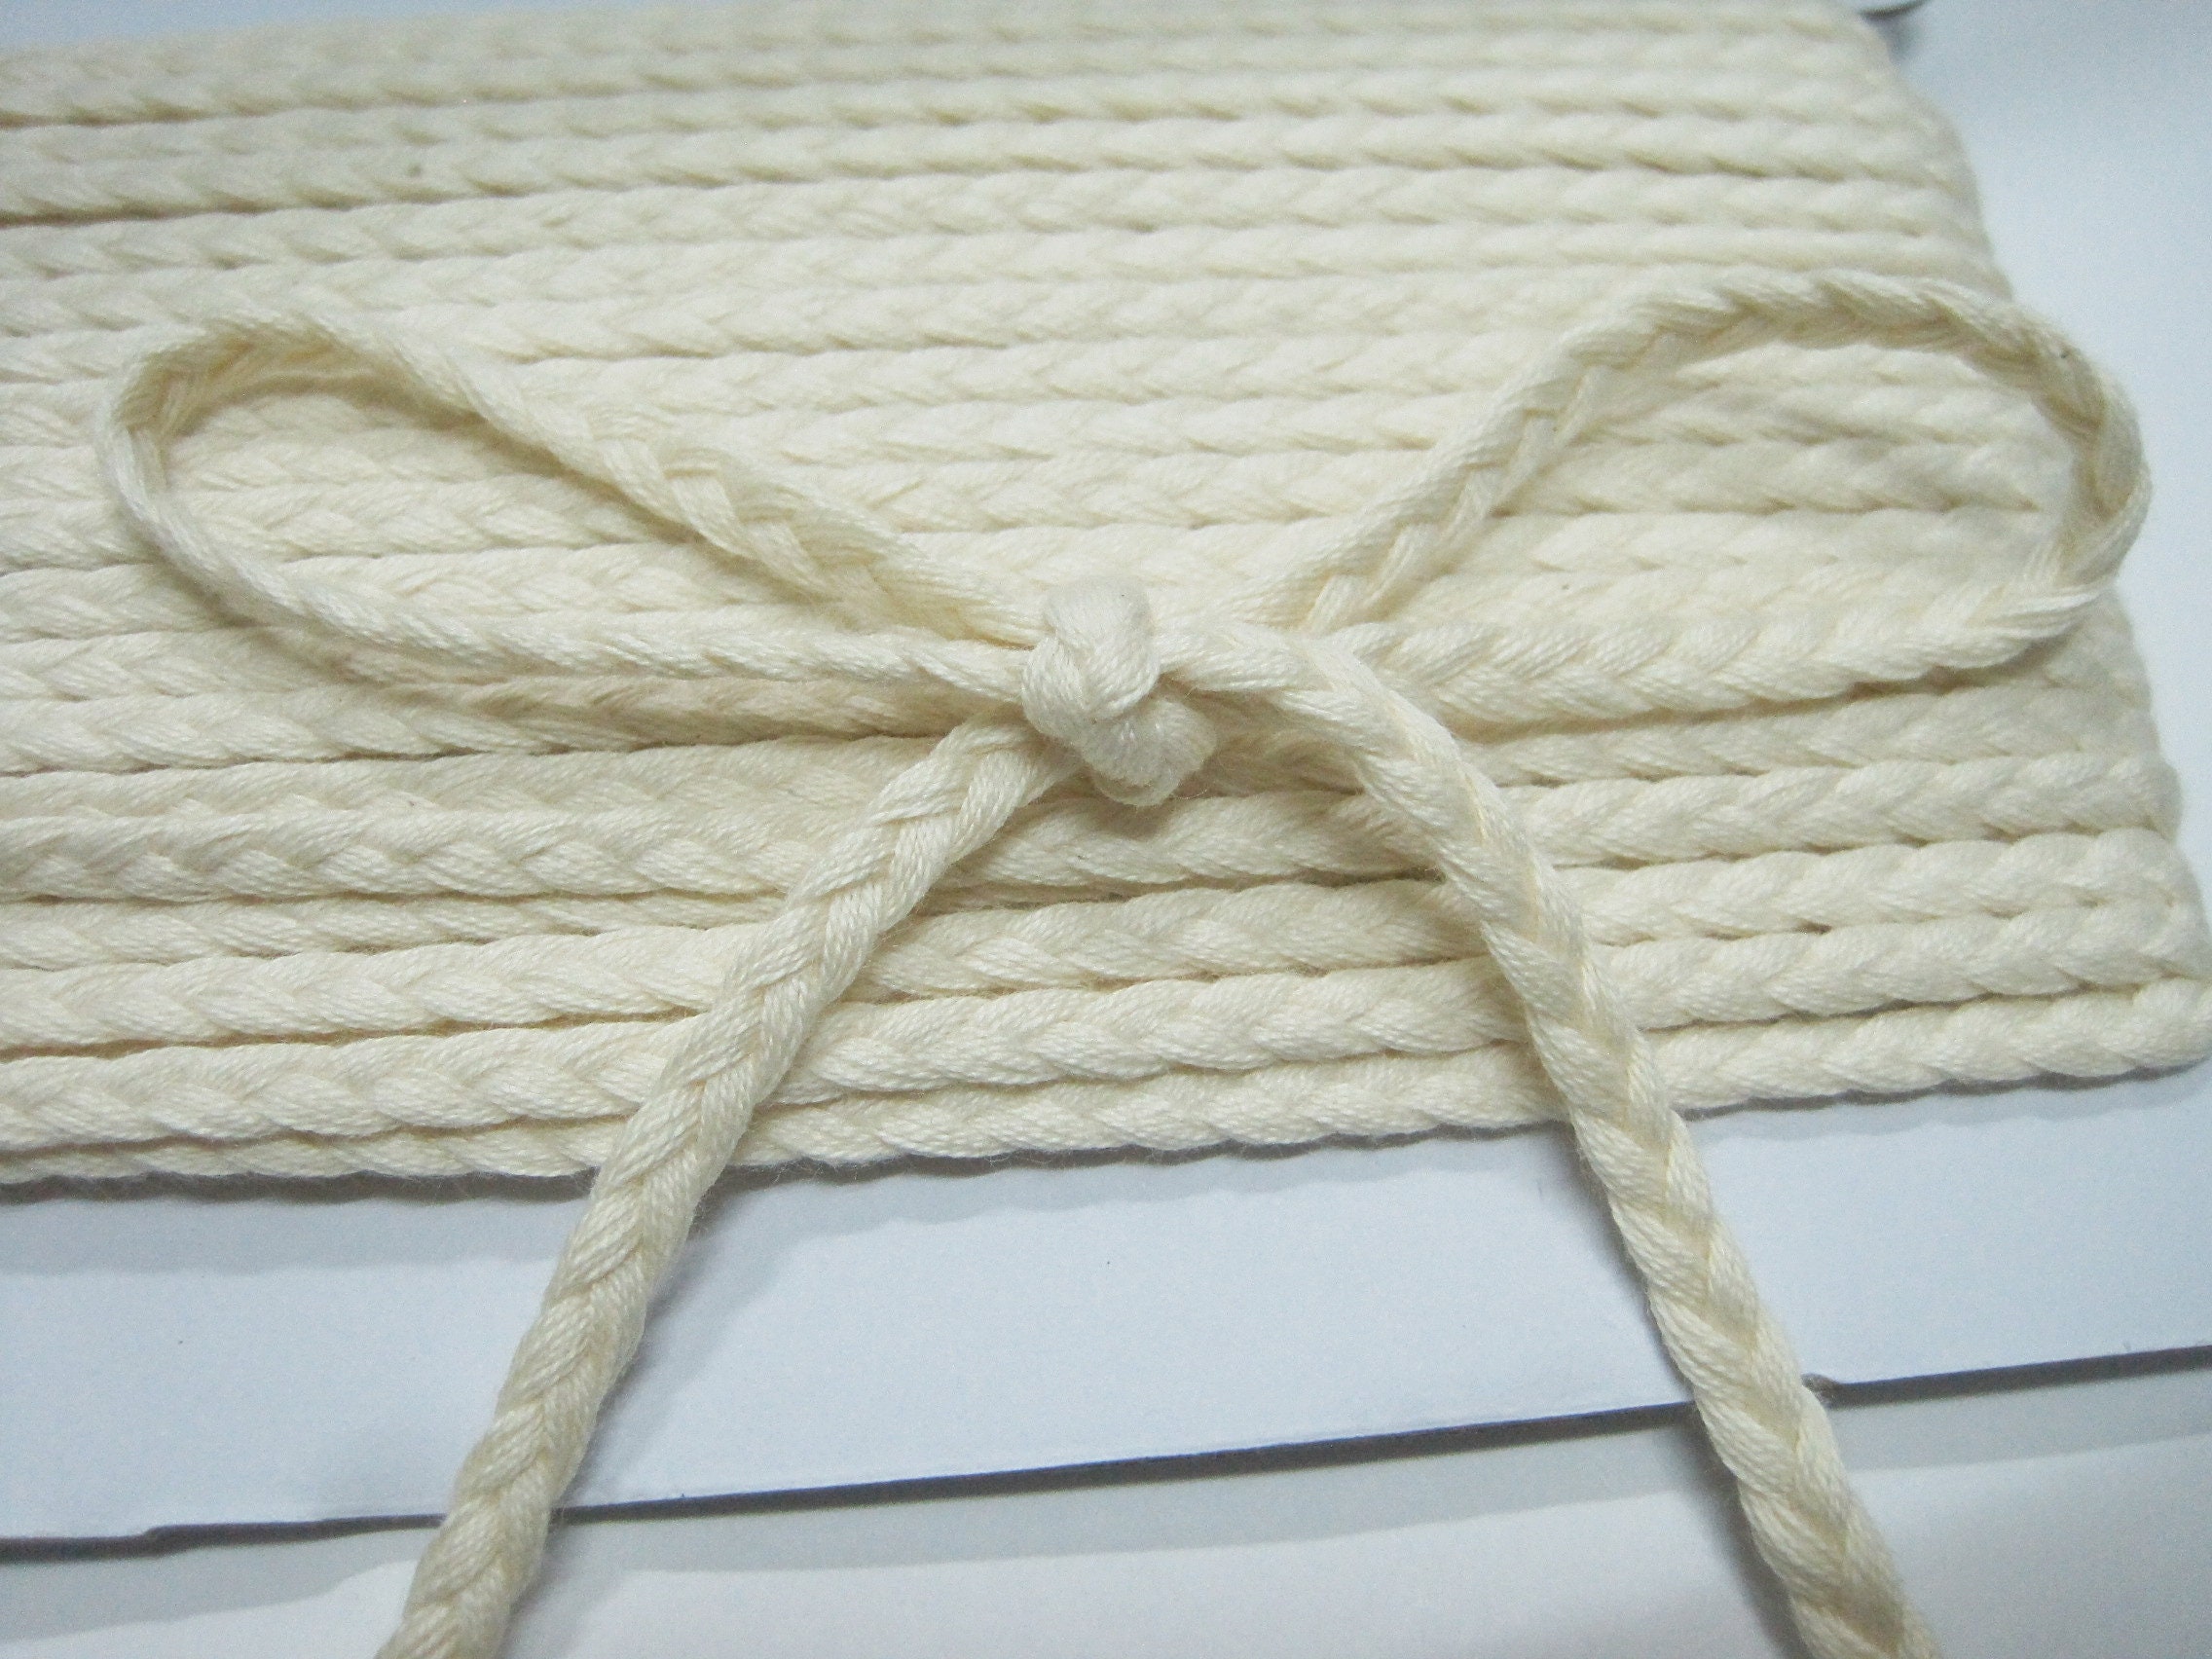 Natural White Cotton Cord Thick 5 Mm, White Cord, Drawstring, Cord 